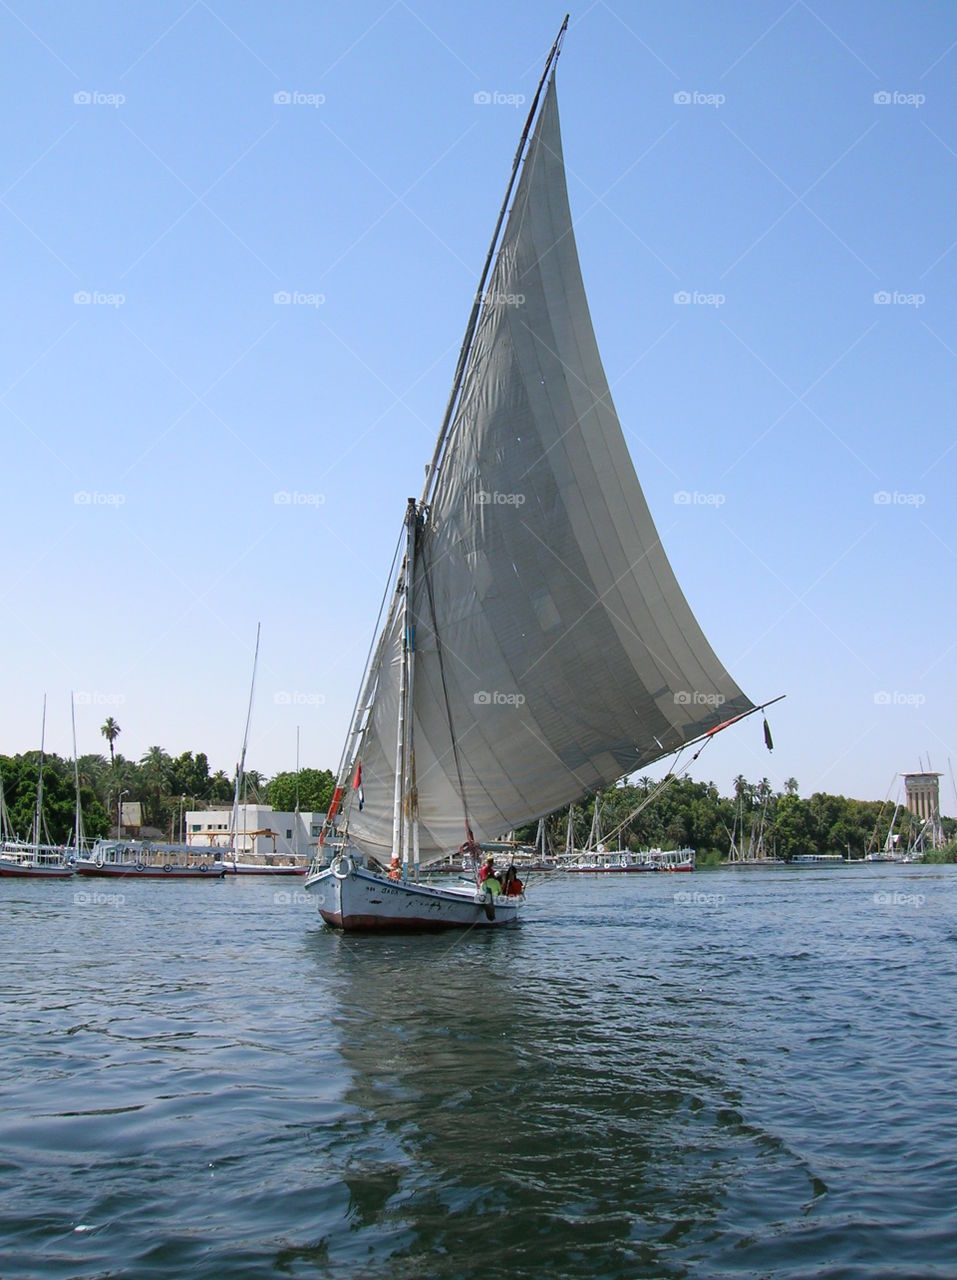 Sailing the Nile River